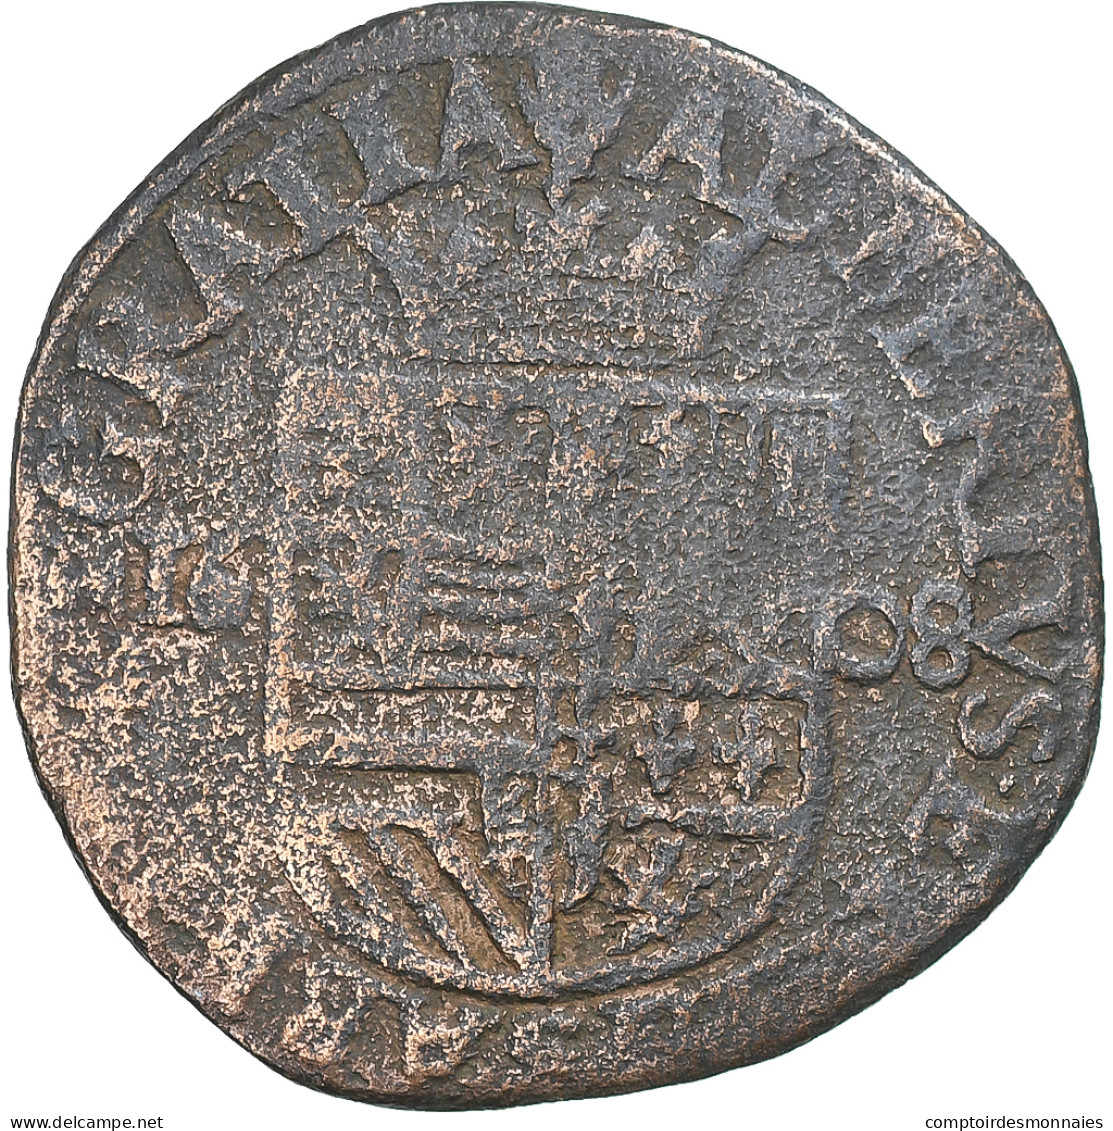 Pays-Bas Espagnols, Albert & Isabelle, Liard, 1608, Anvers, TB, Cuivre - Países Bajos Españoles